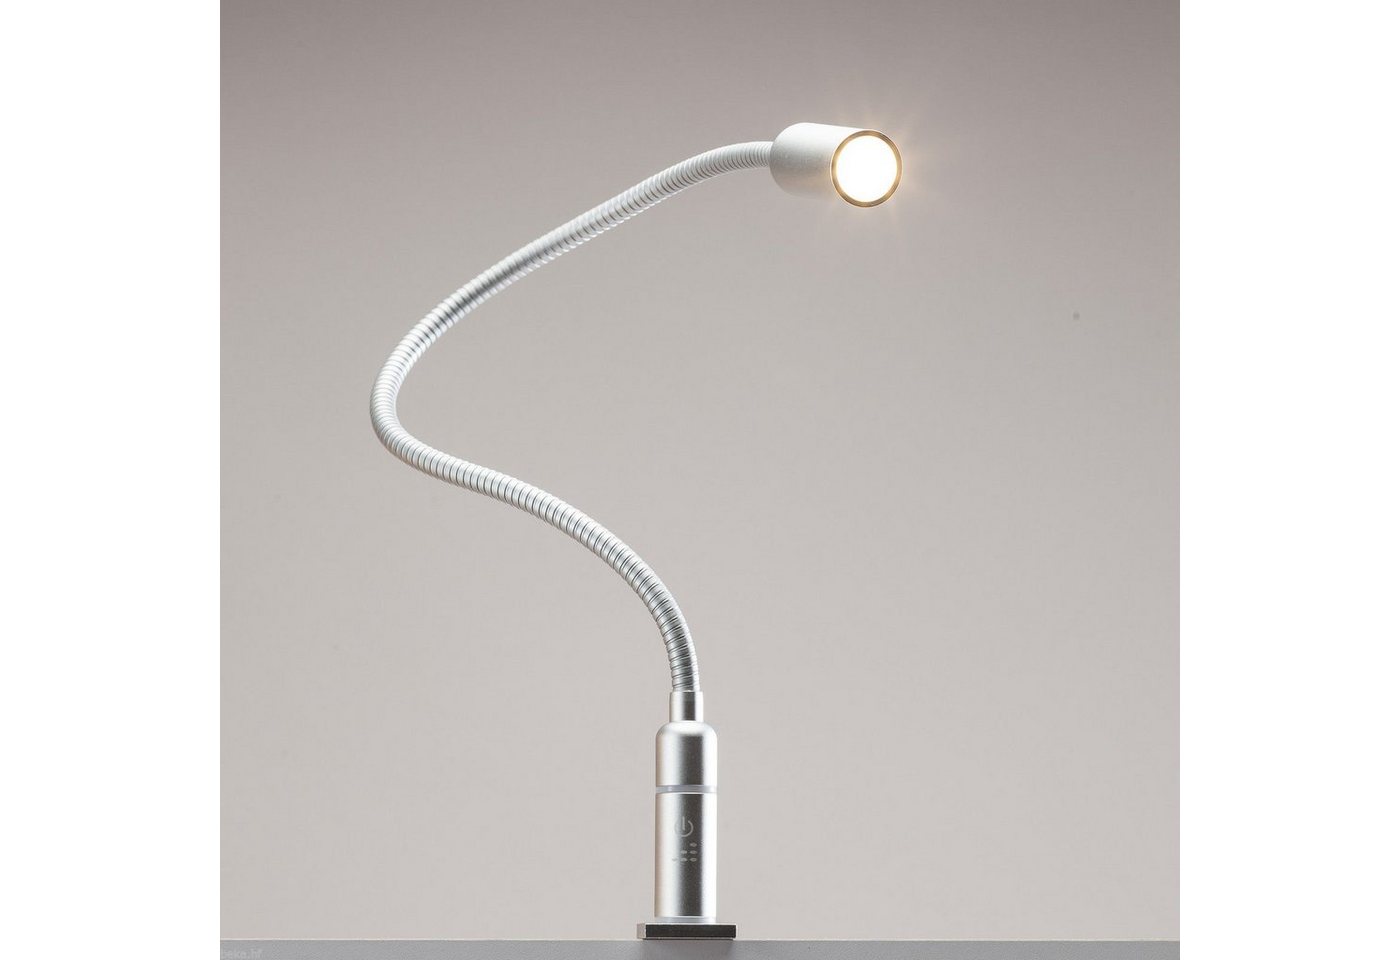 kalb Bettleuchte 3W LED Leseleuchte Nachttischlampe Bettlampe Leselampe dimmbar, 1er Set silbergrau, warmweiß von kalb